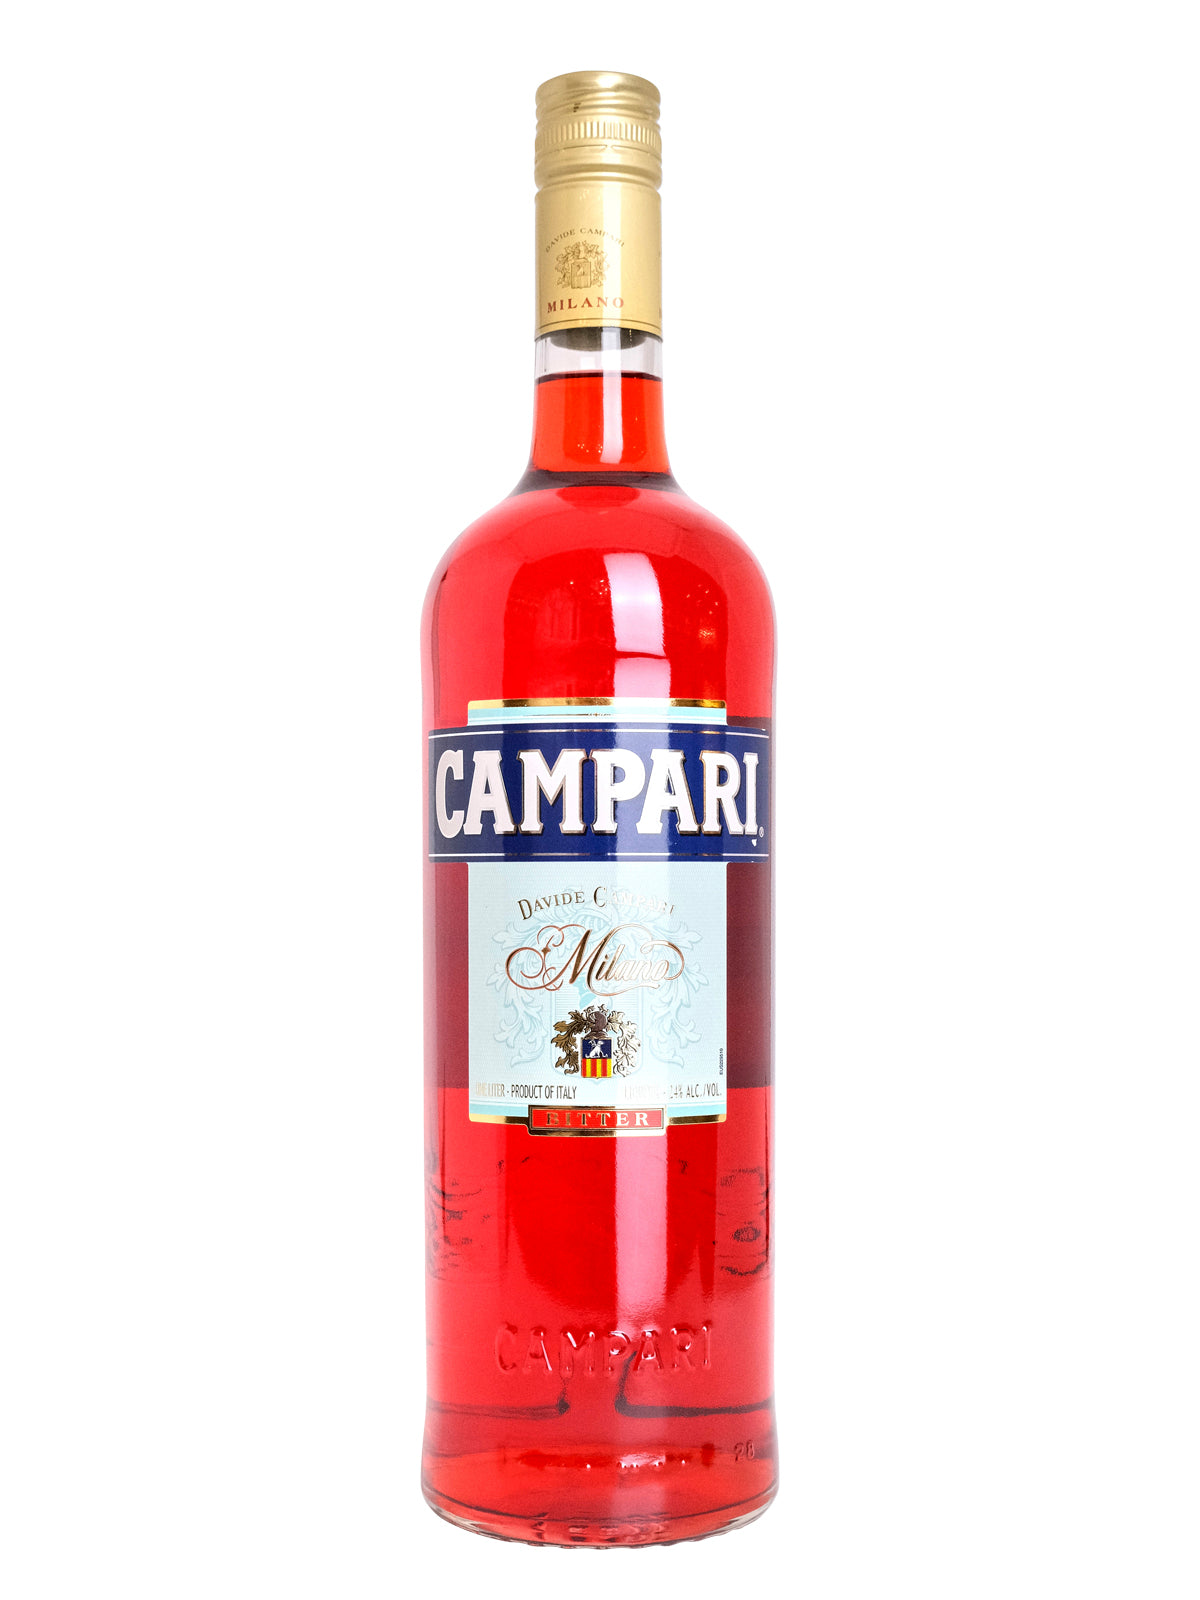 Promocja Campari Bitter 1l w Selgros